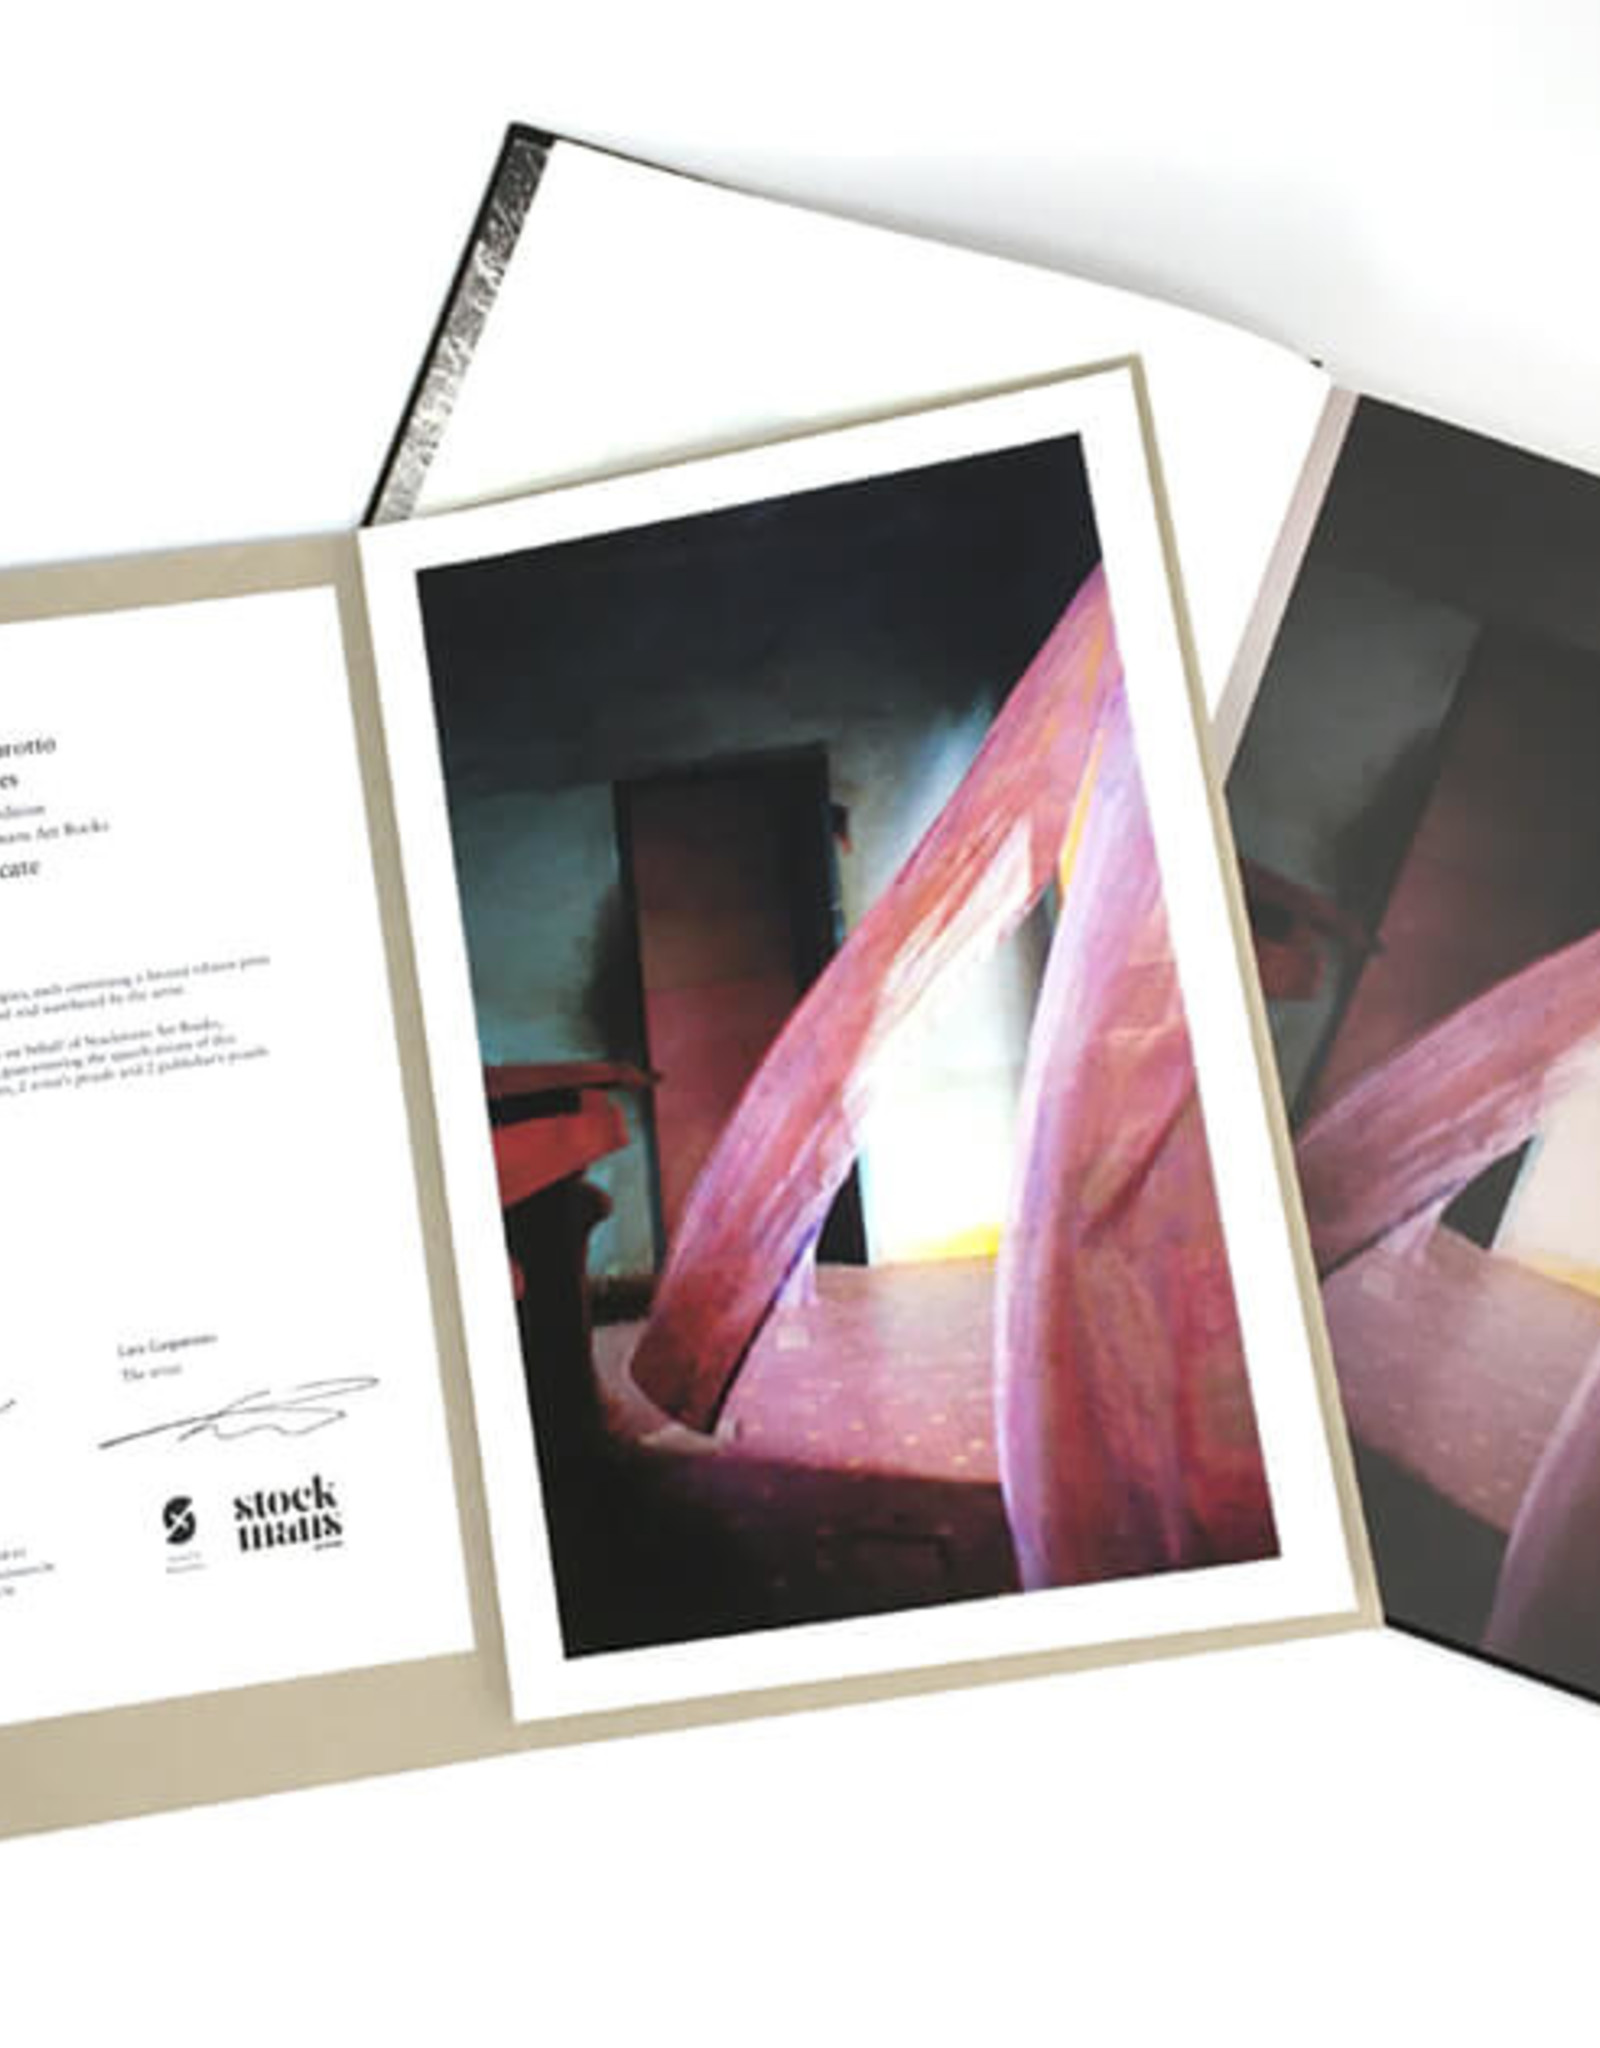 Editie met boek Lara Gasparotto: limited art print + monografie Solstices